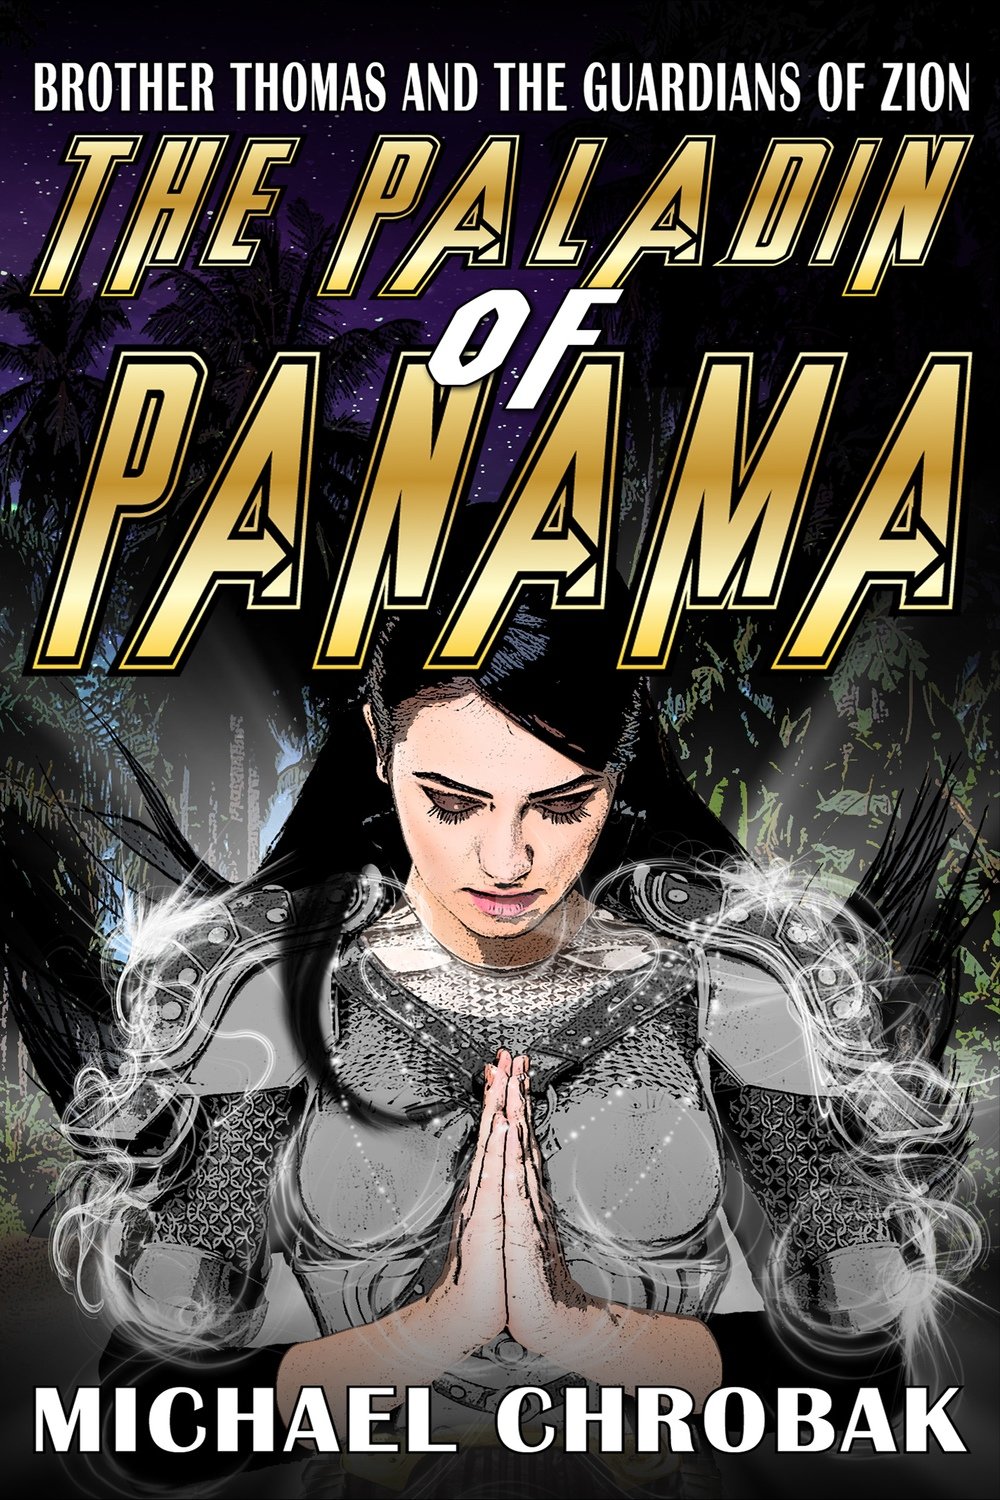 Book Two - Paladin of Panama